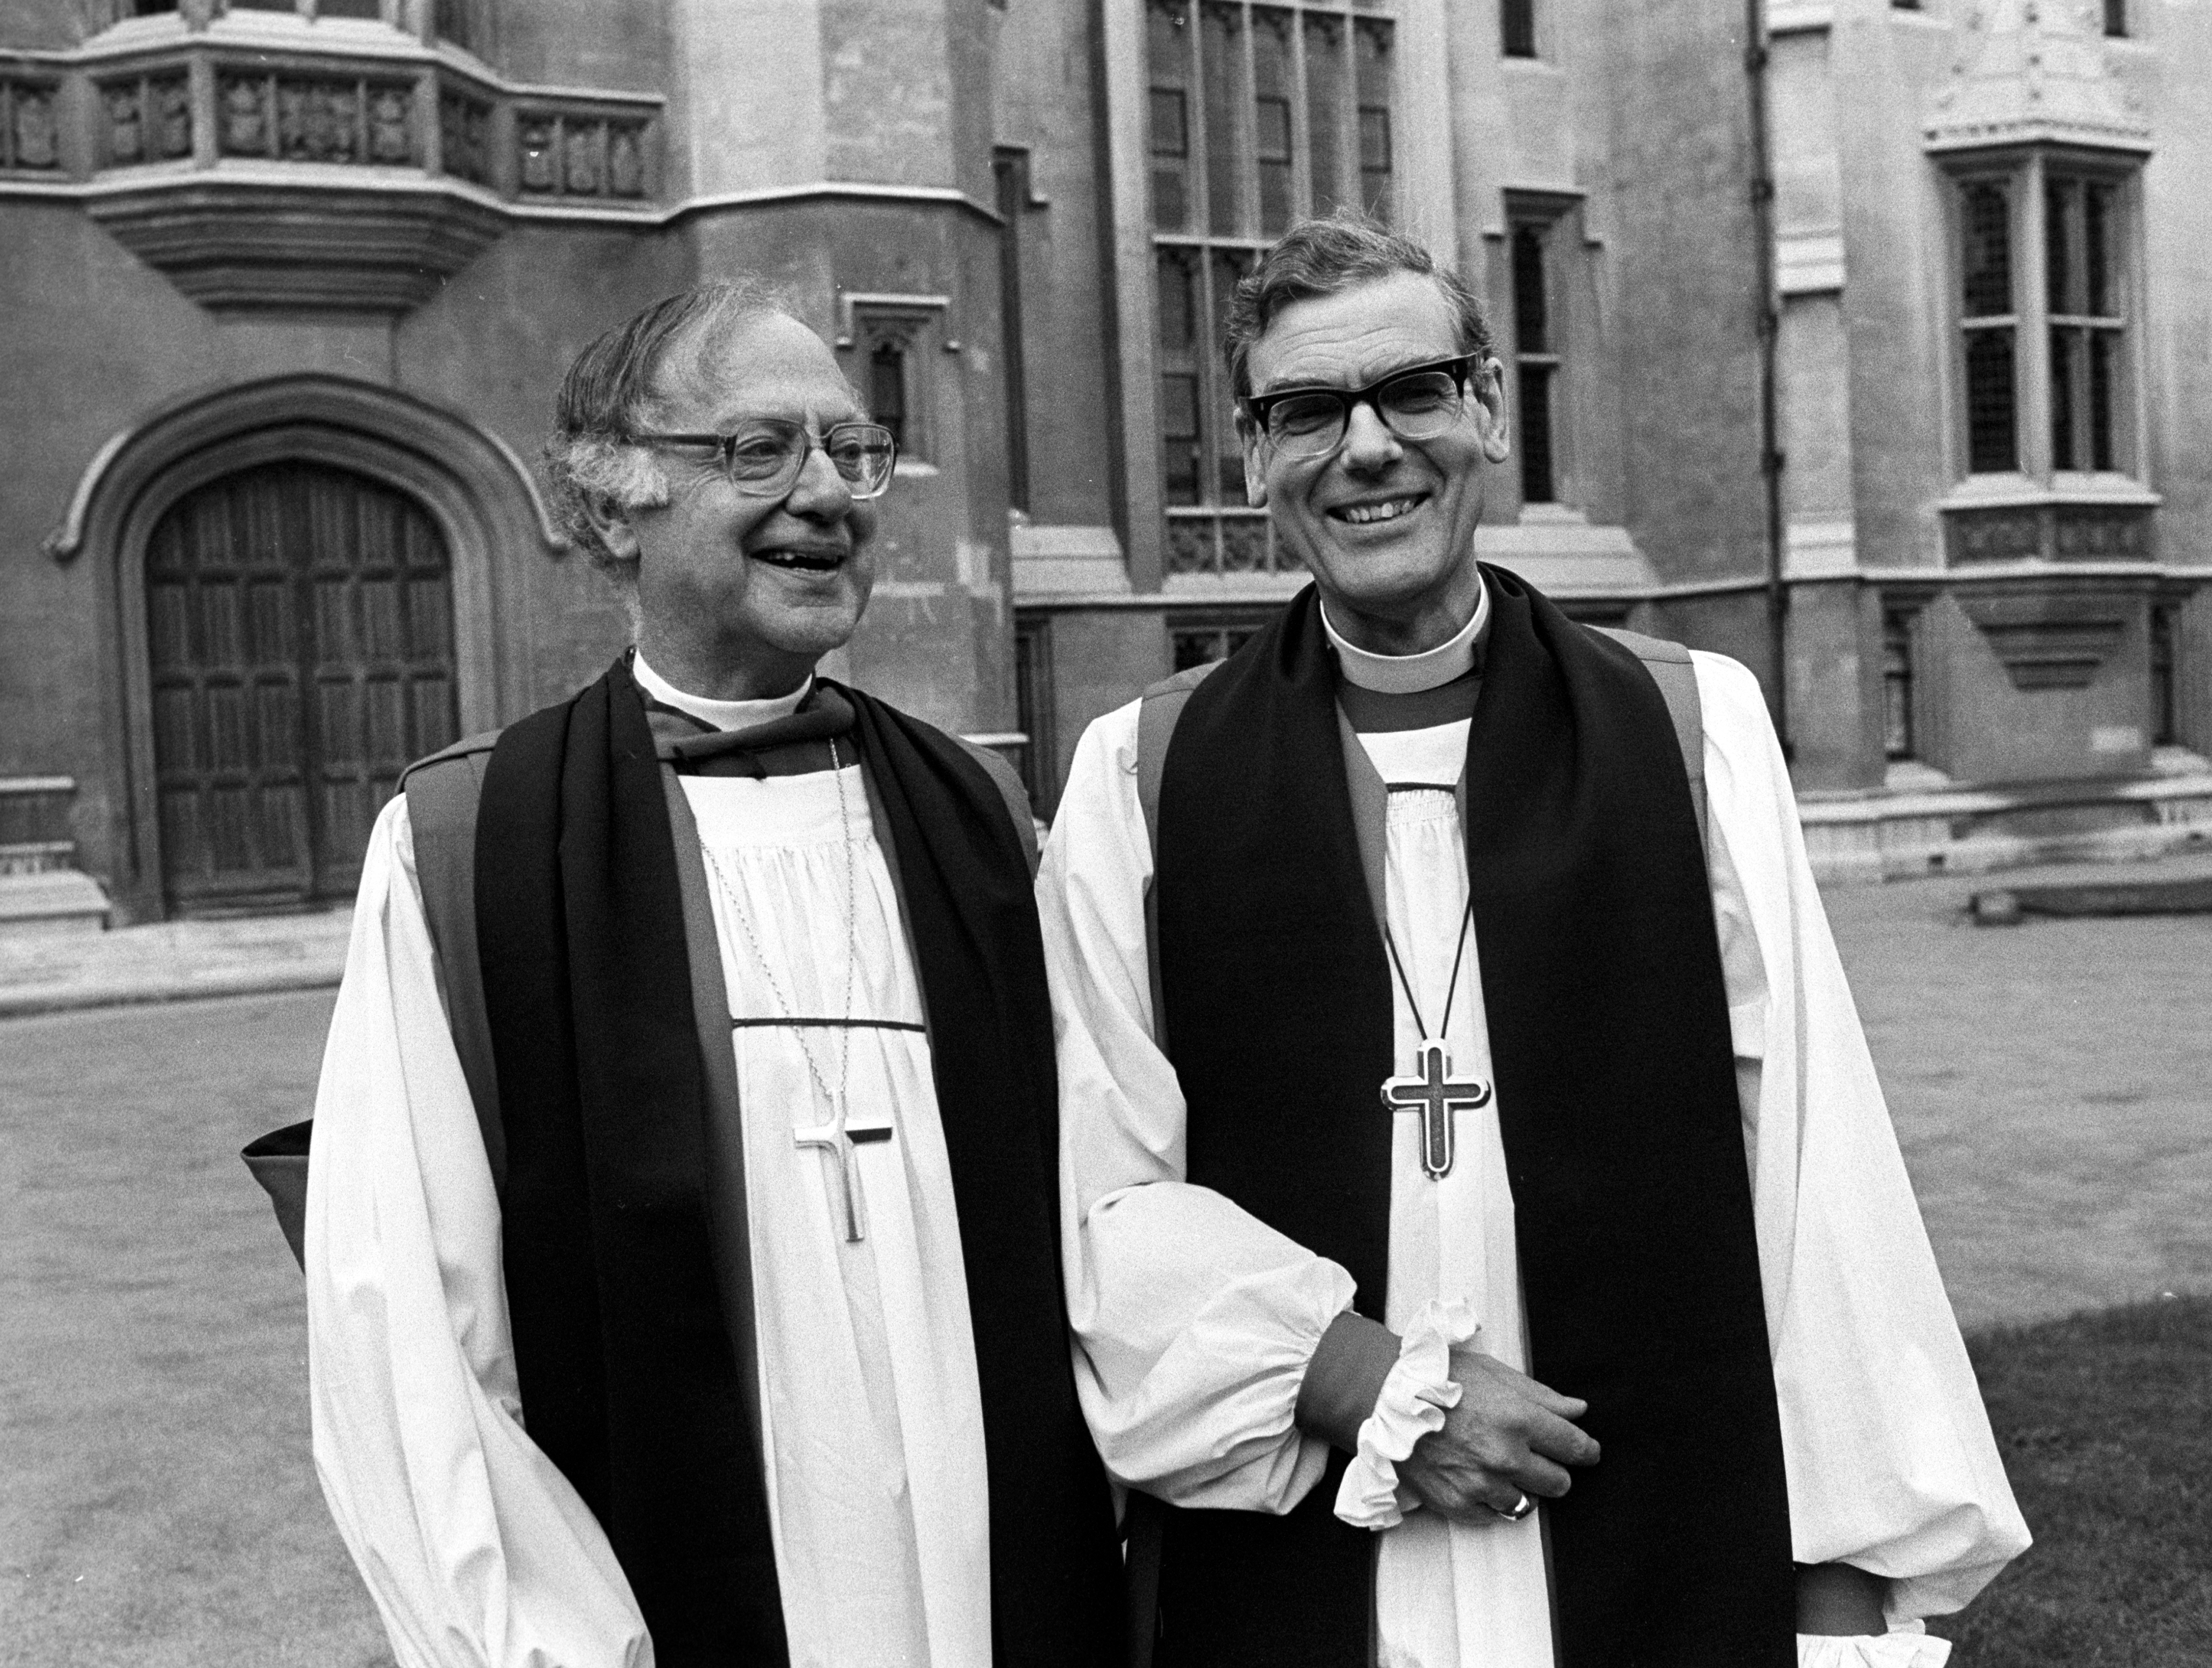 Obituary: John Habgood, Archbishop of York 1983-1995